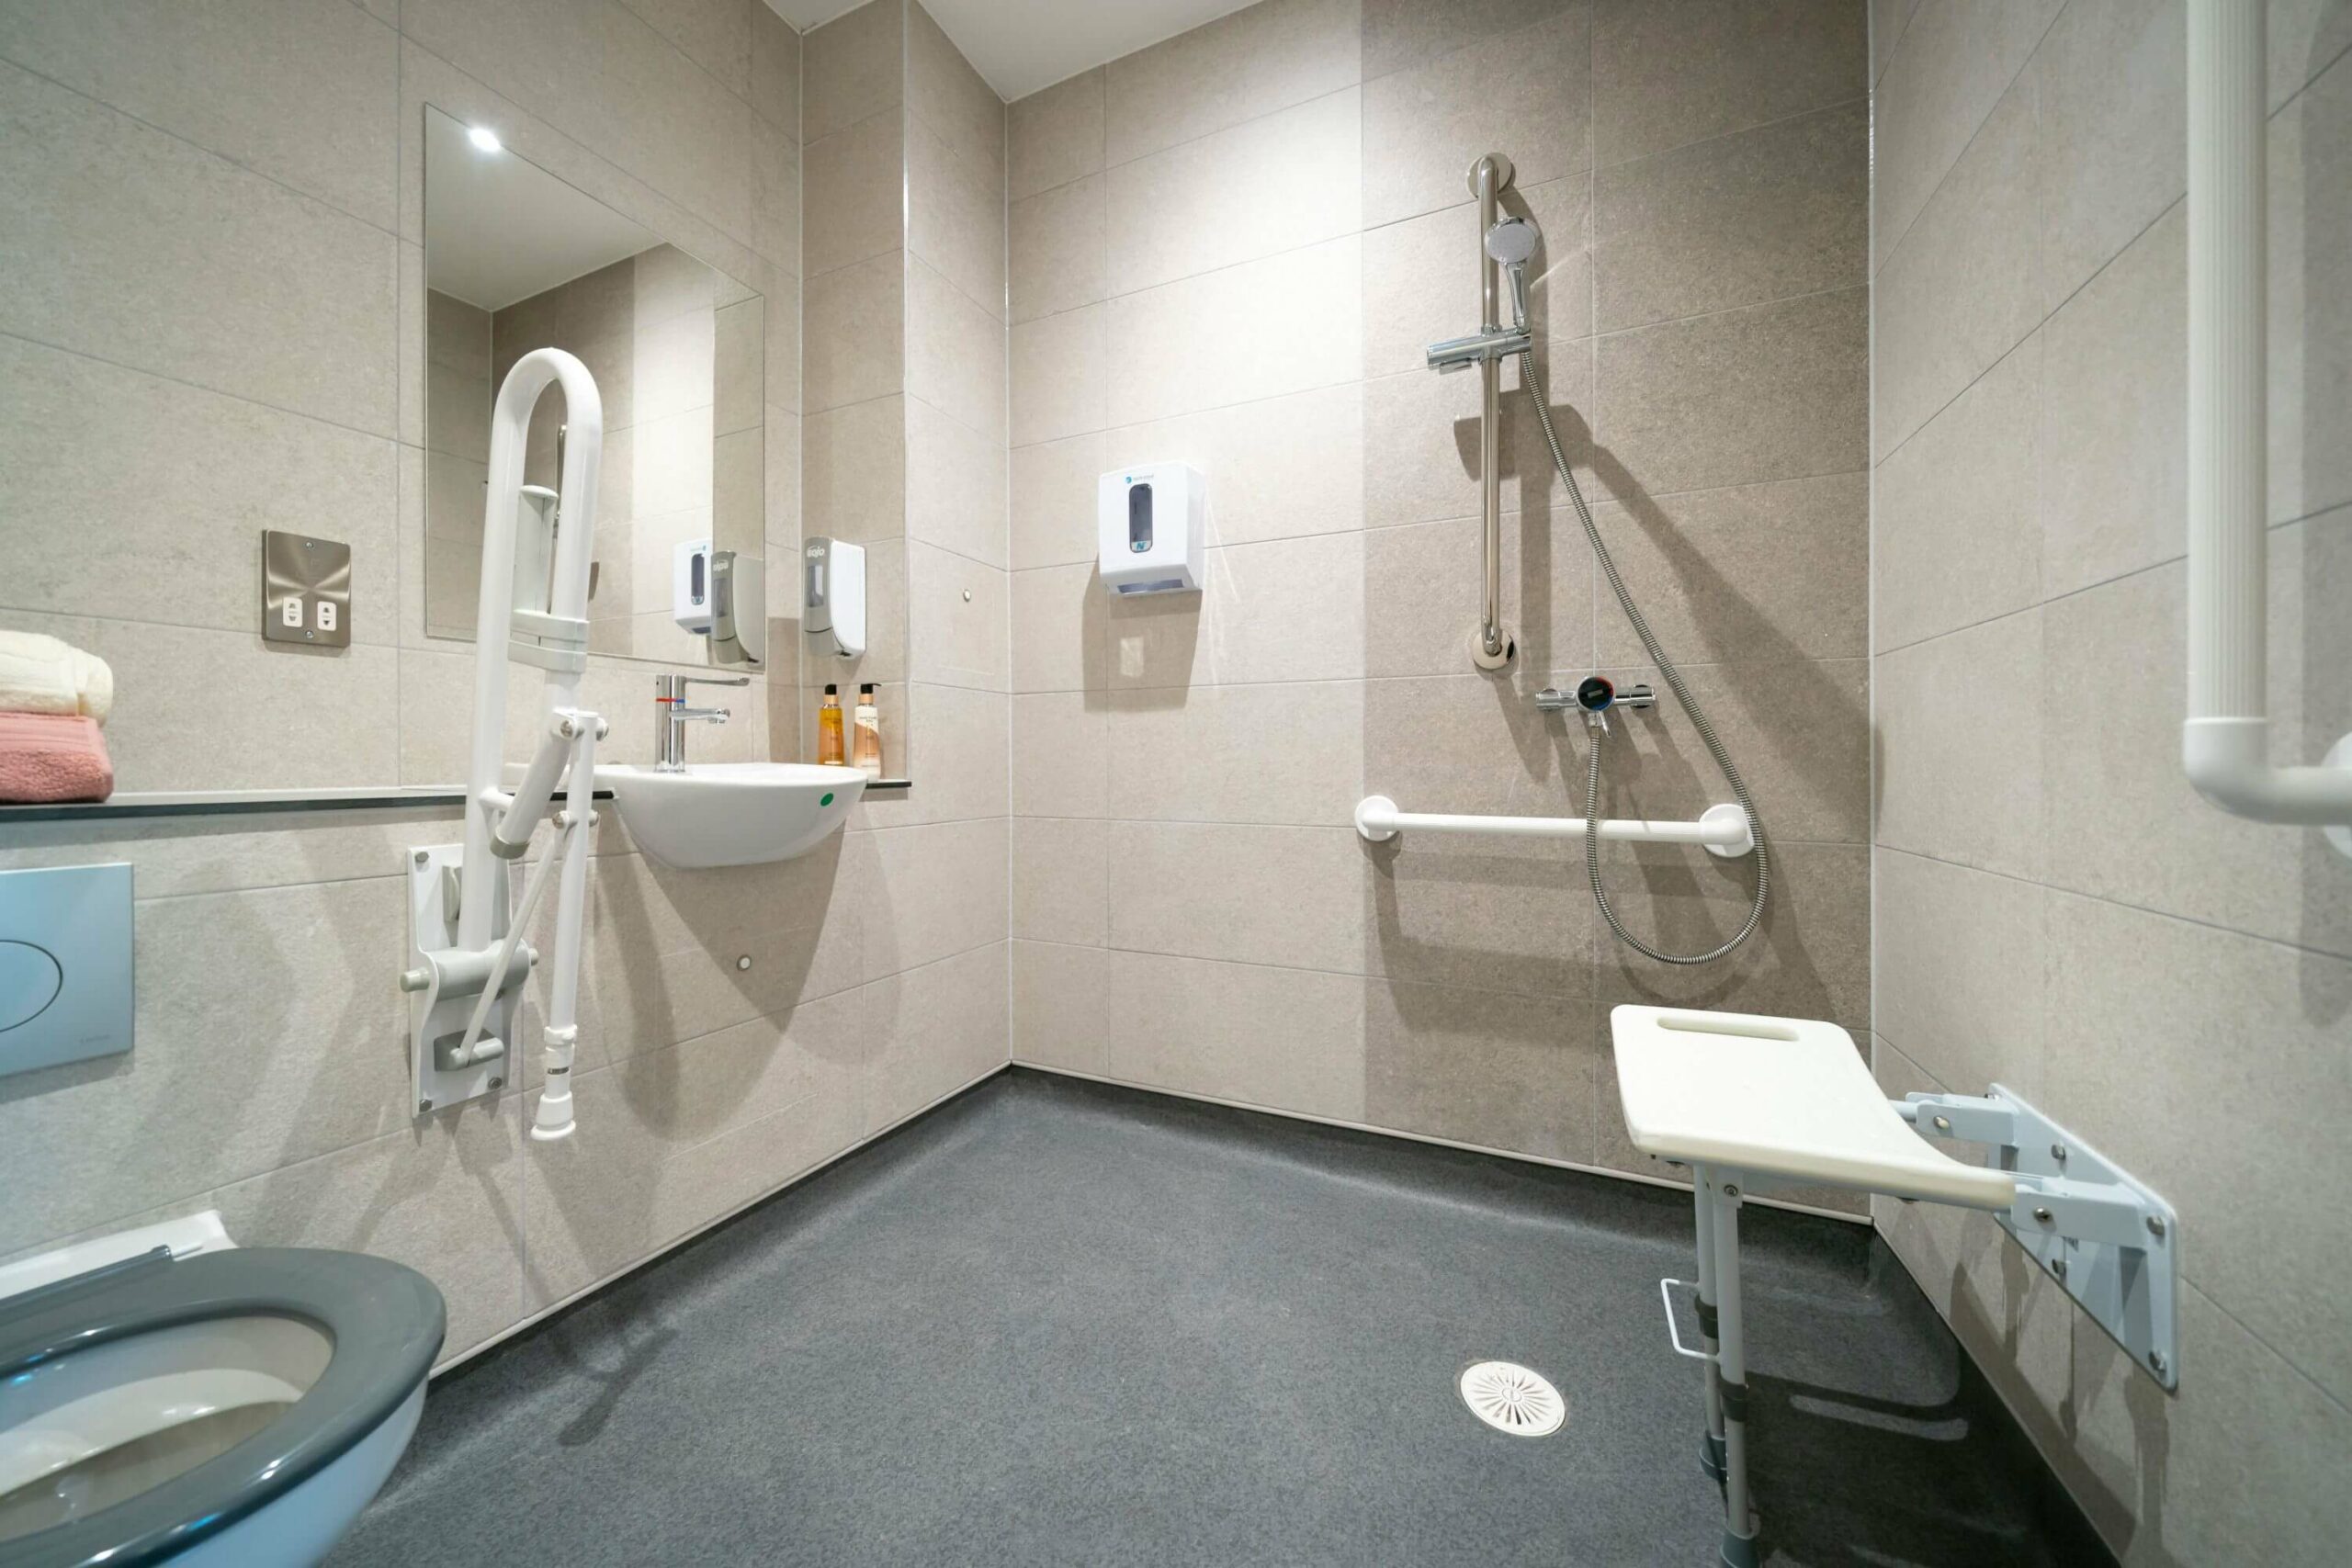 Specialised shower wet room